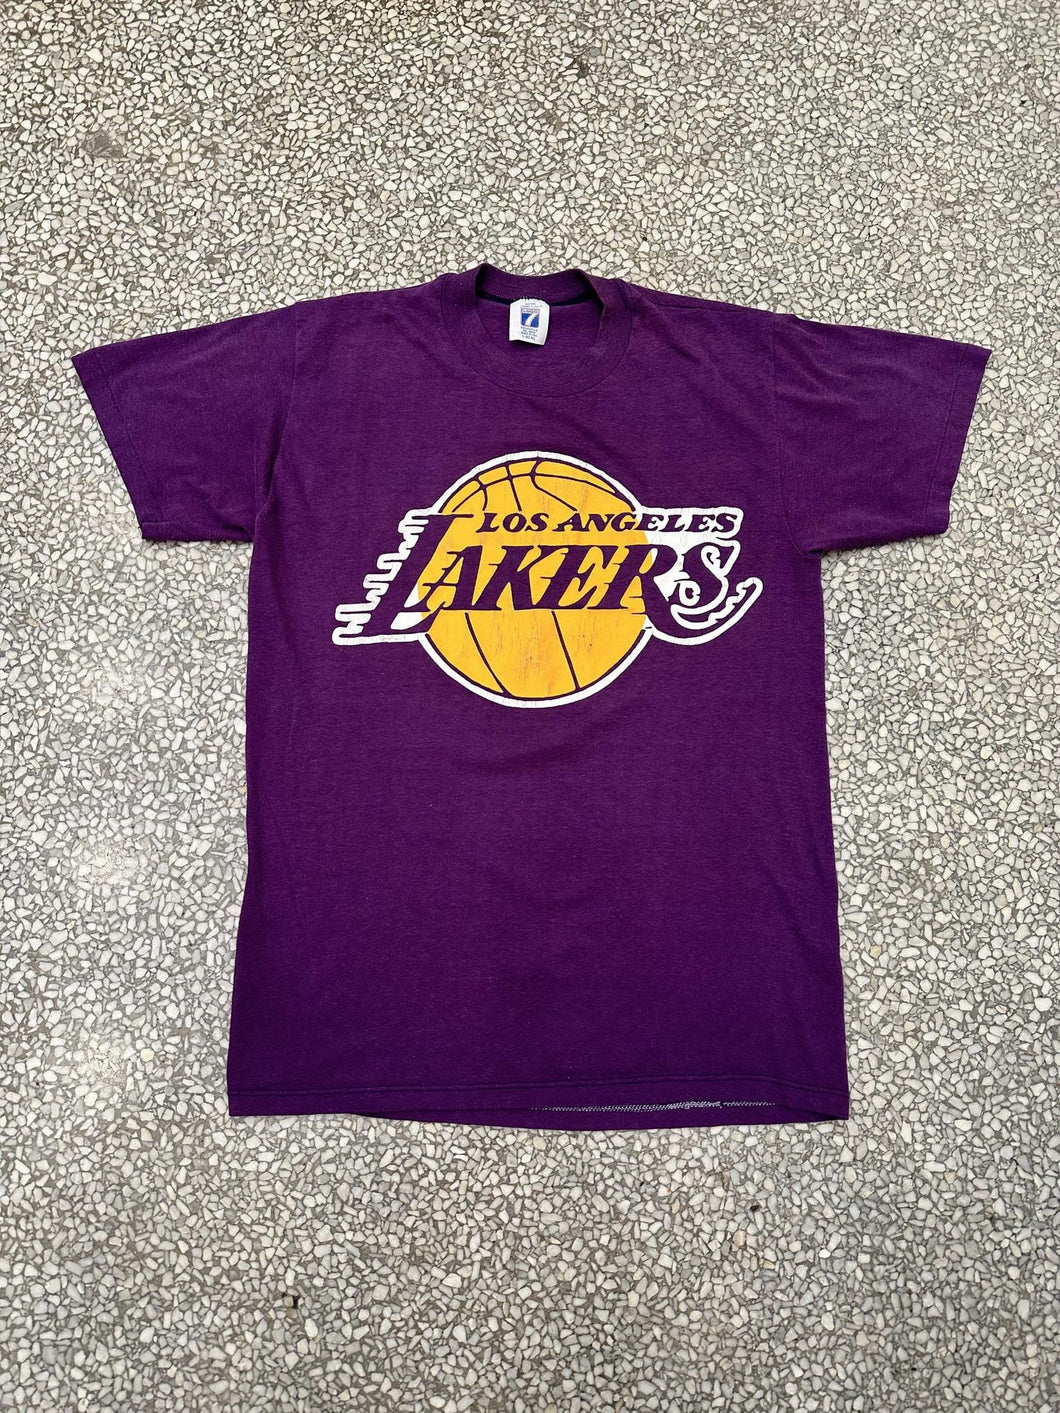 Los Angeles Lakers Vintage 90s Logo 7 Tee Paper Thin Purple ABC Vintage 